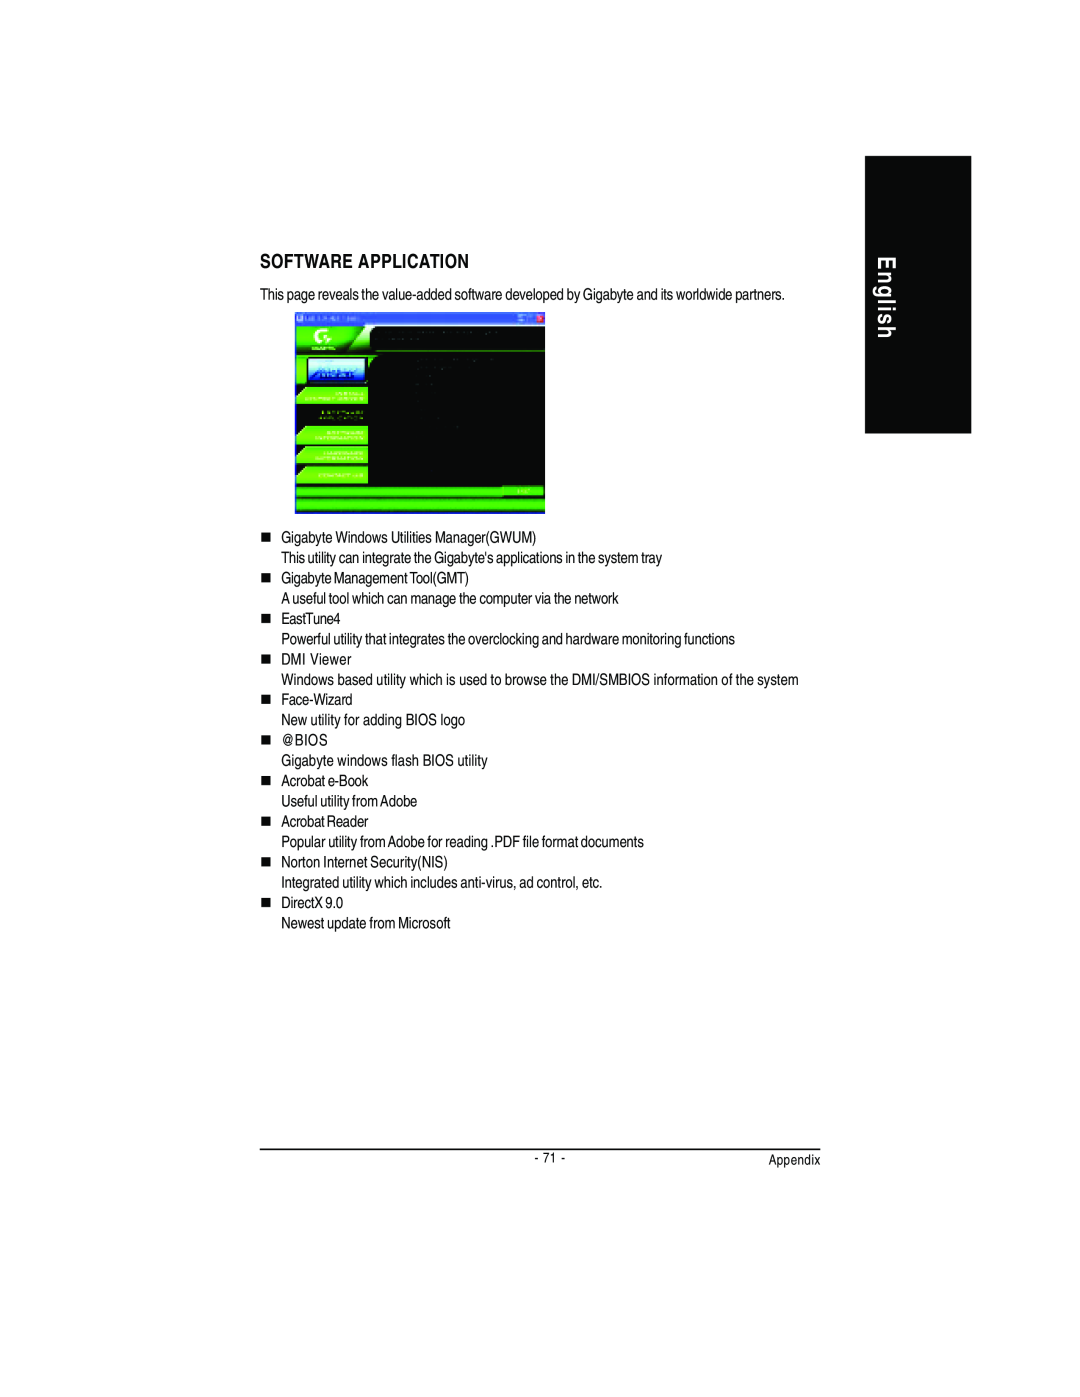 Gigabyte GA-7VA manual English, Software Application 